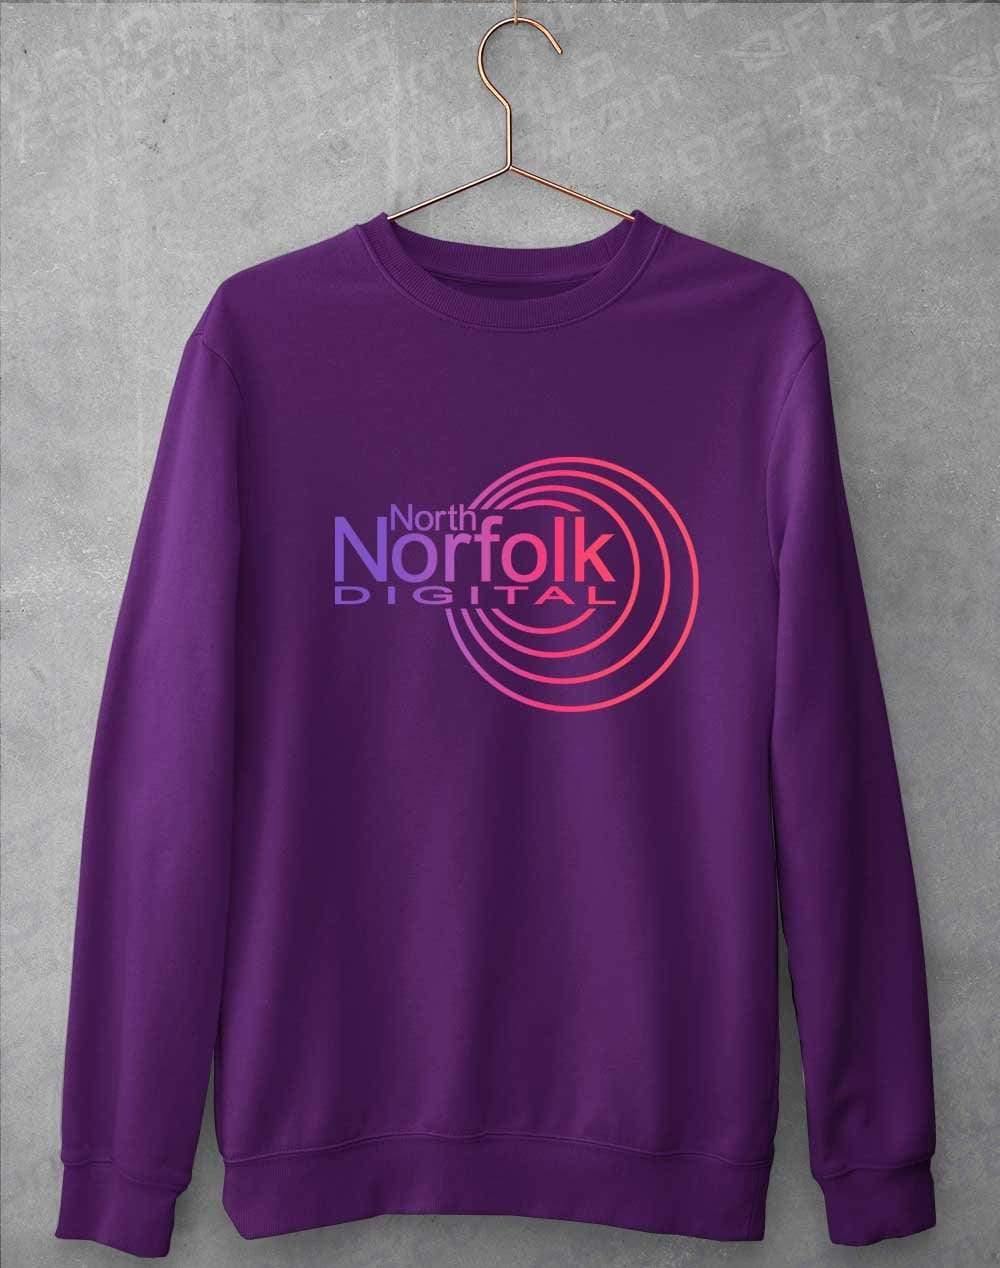 North Norfolk Digital Sweatshirt S / Purple  - Off World Tees